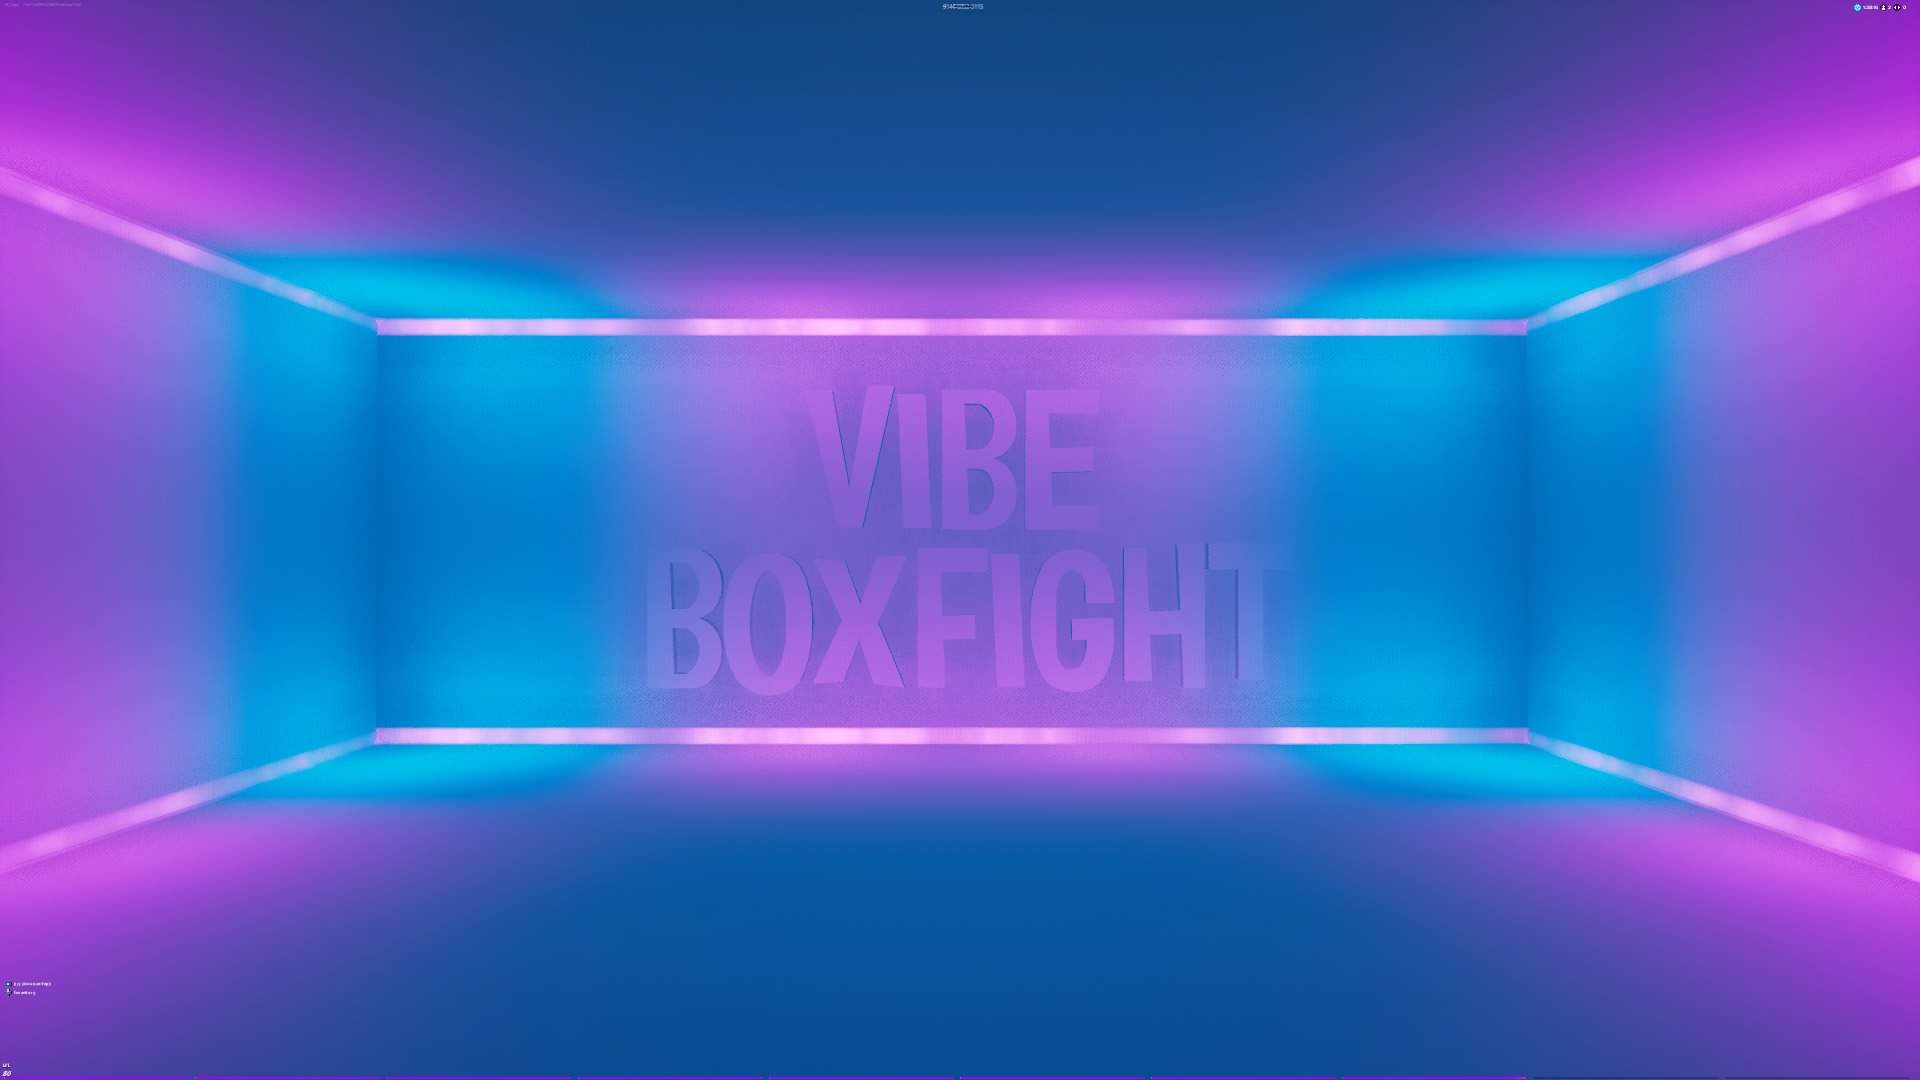 VIBE BOXFIGHT